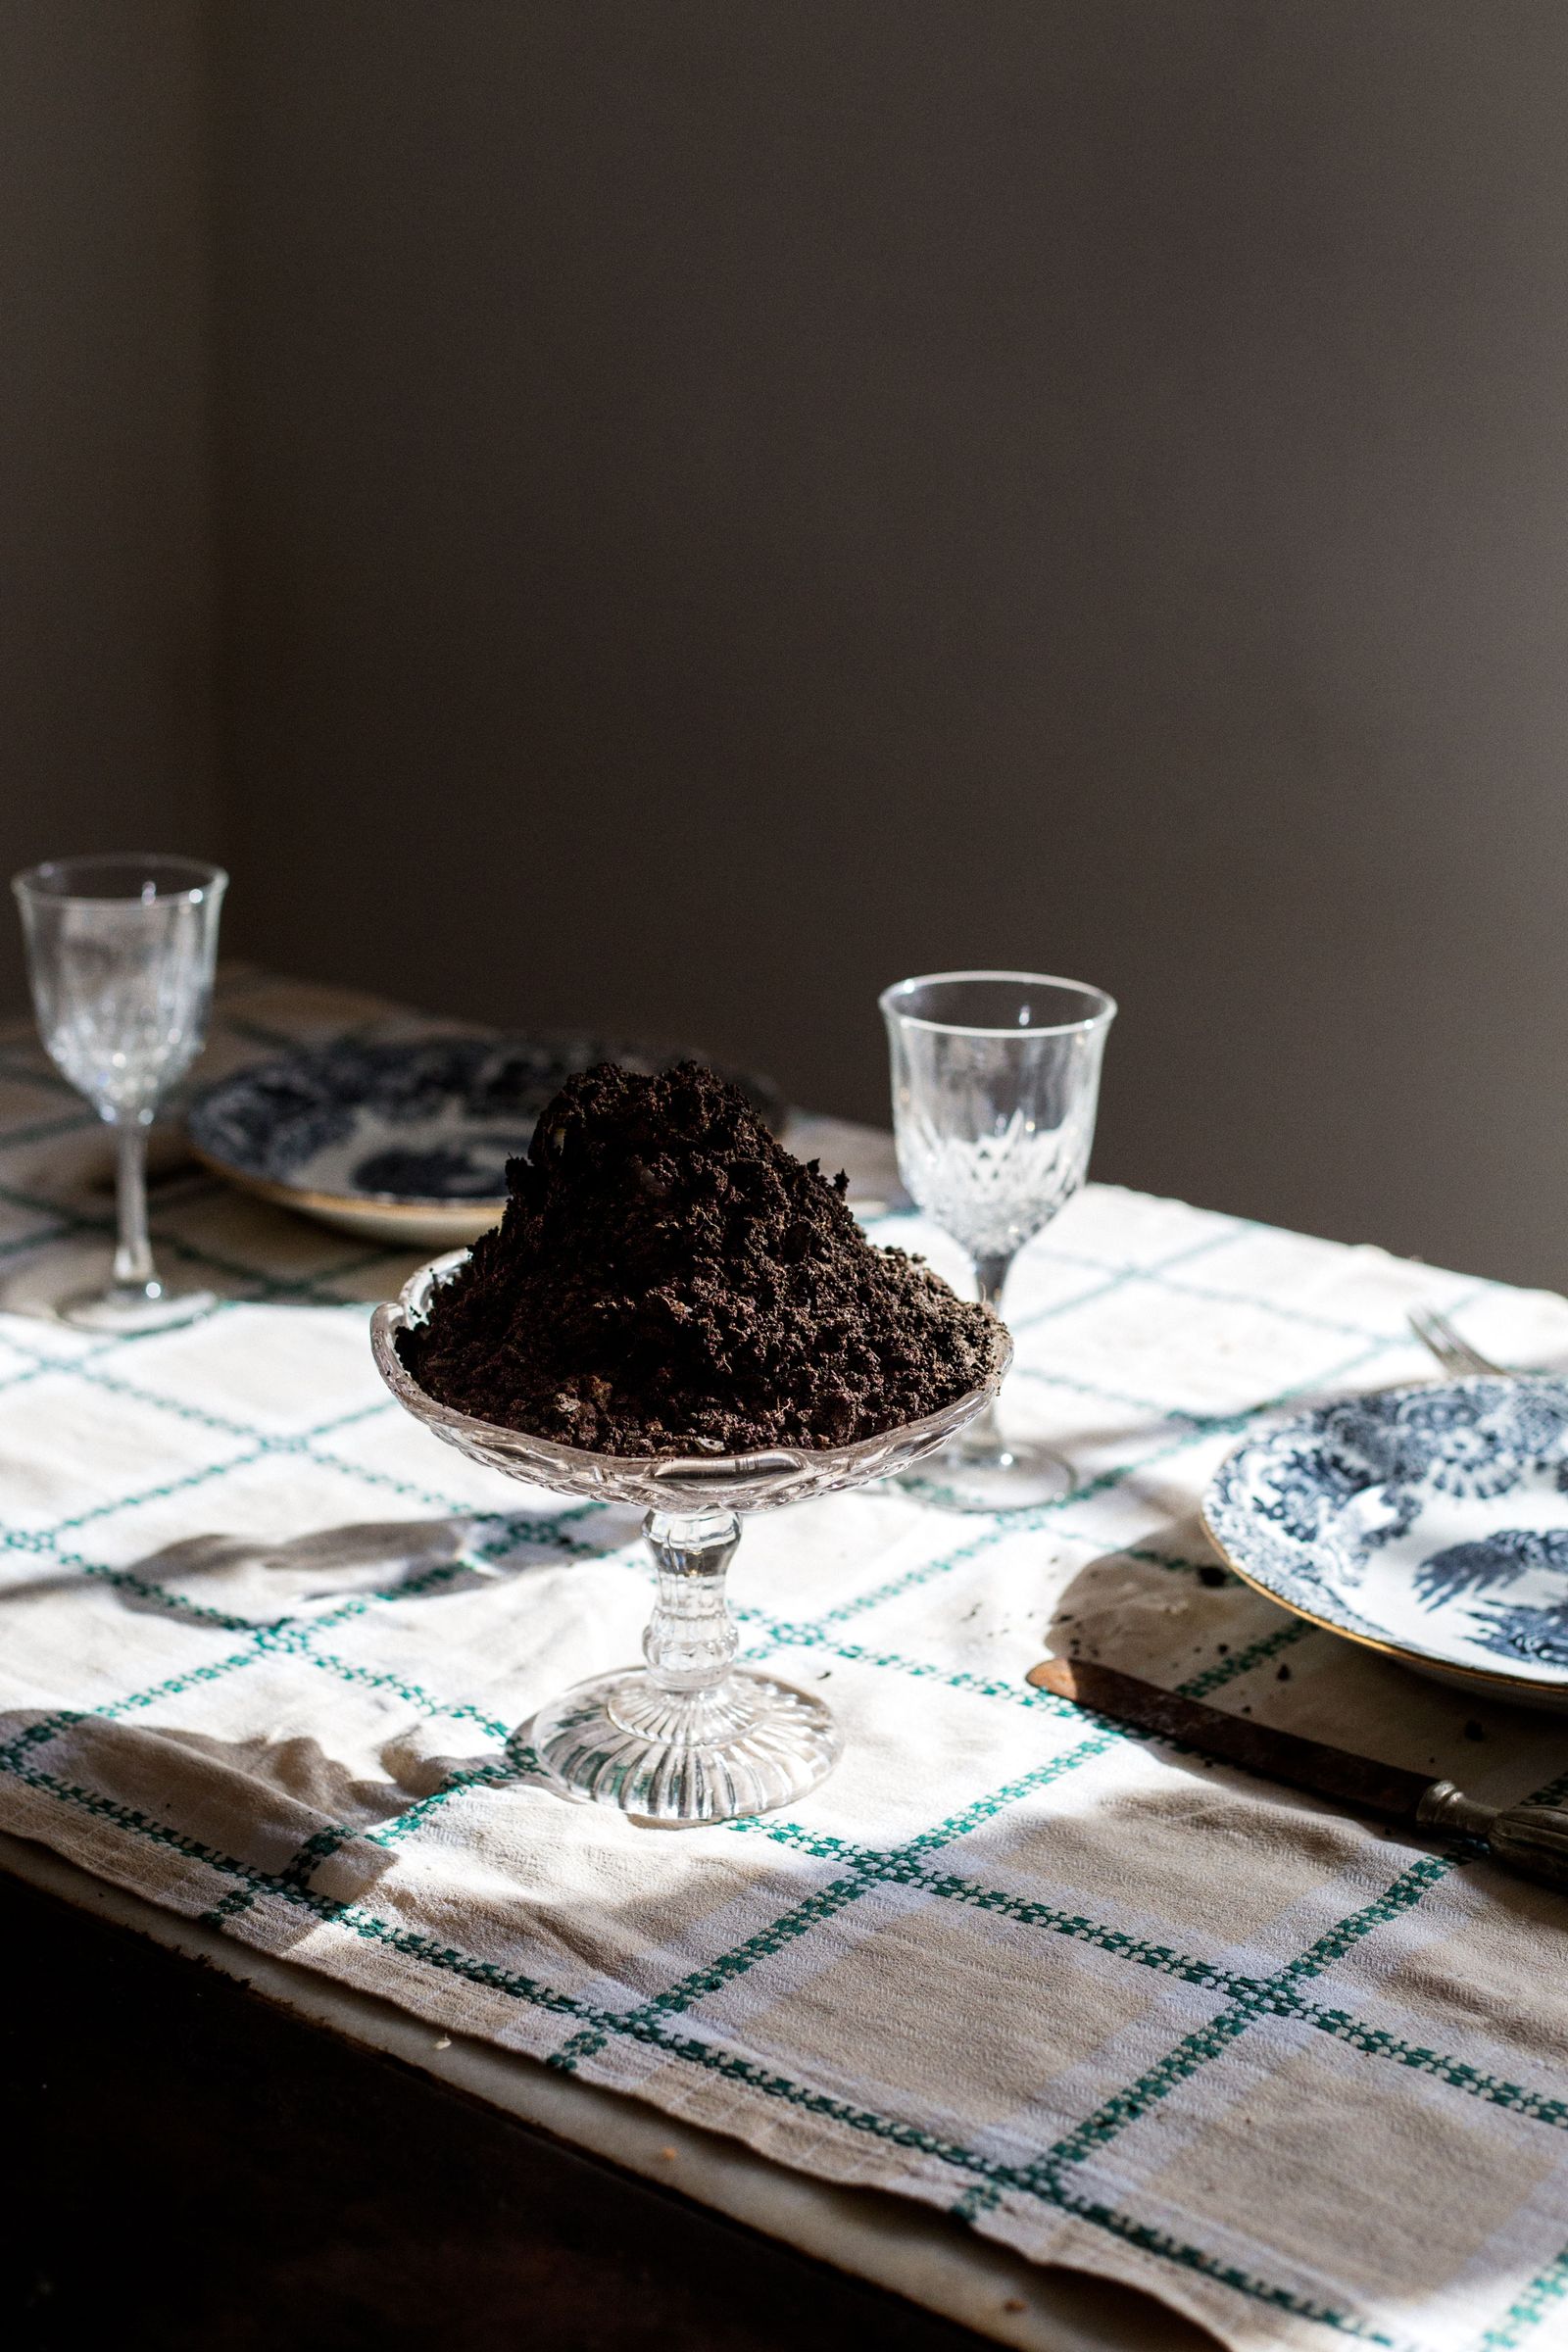 © Ana Nuñez Rodriguez - Eating soil